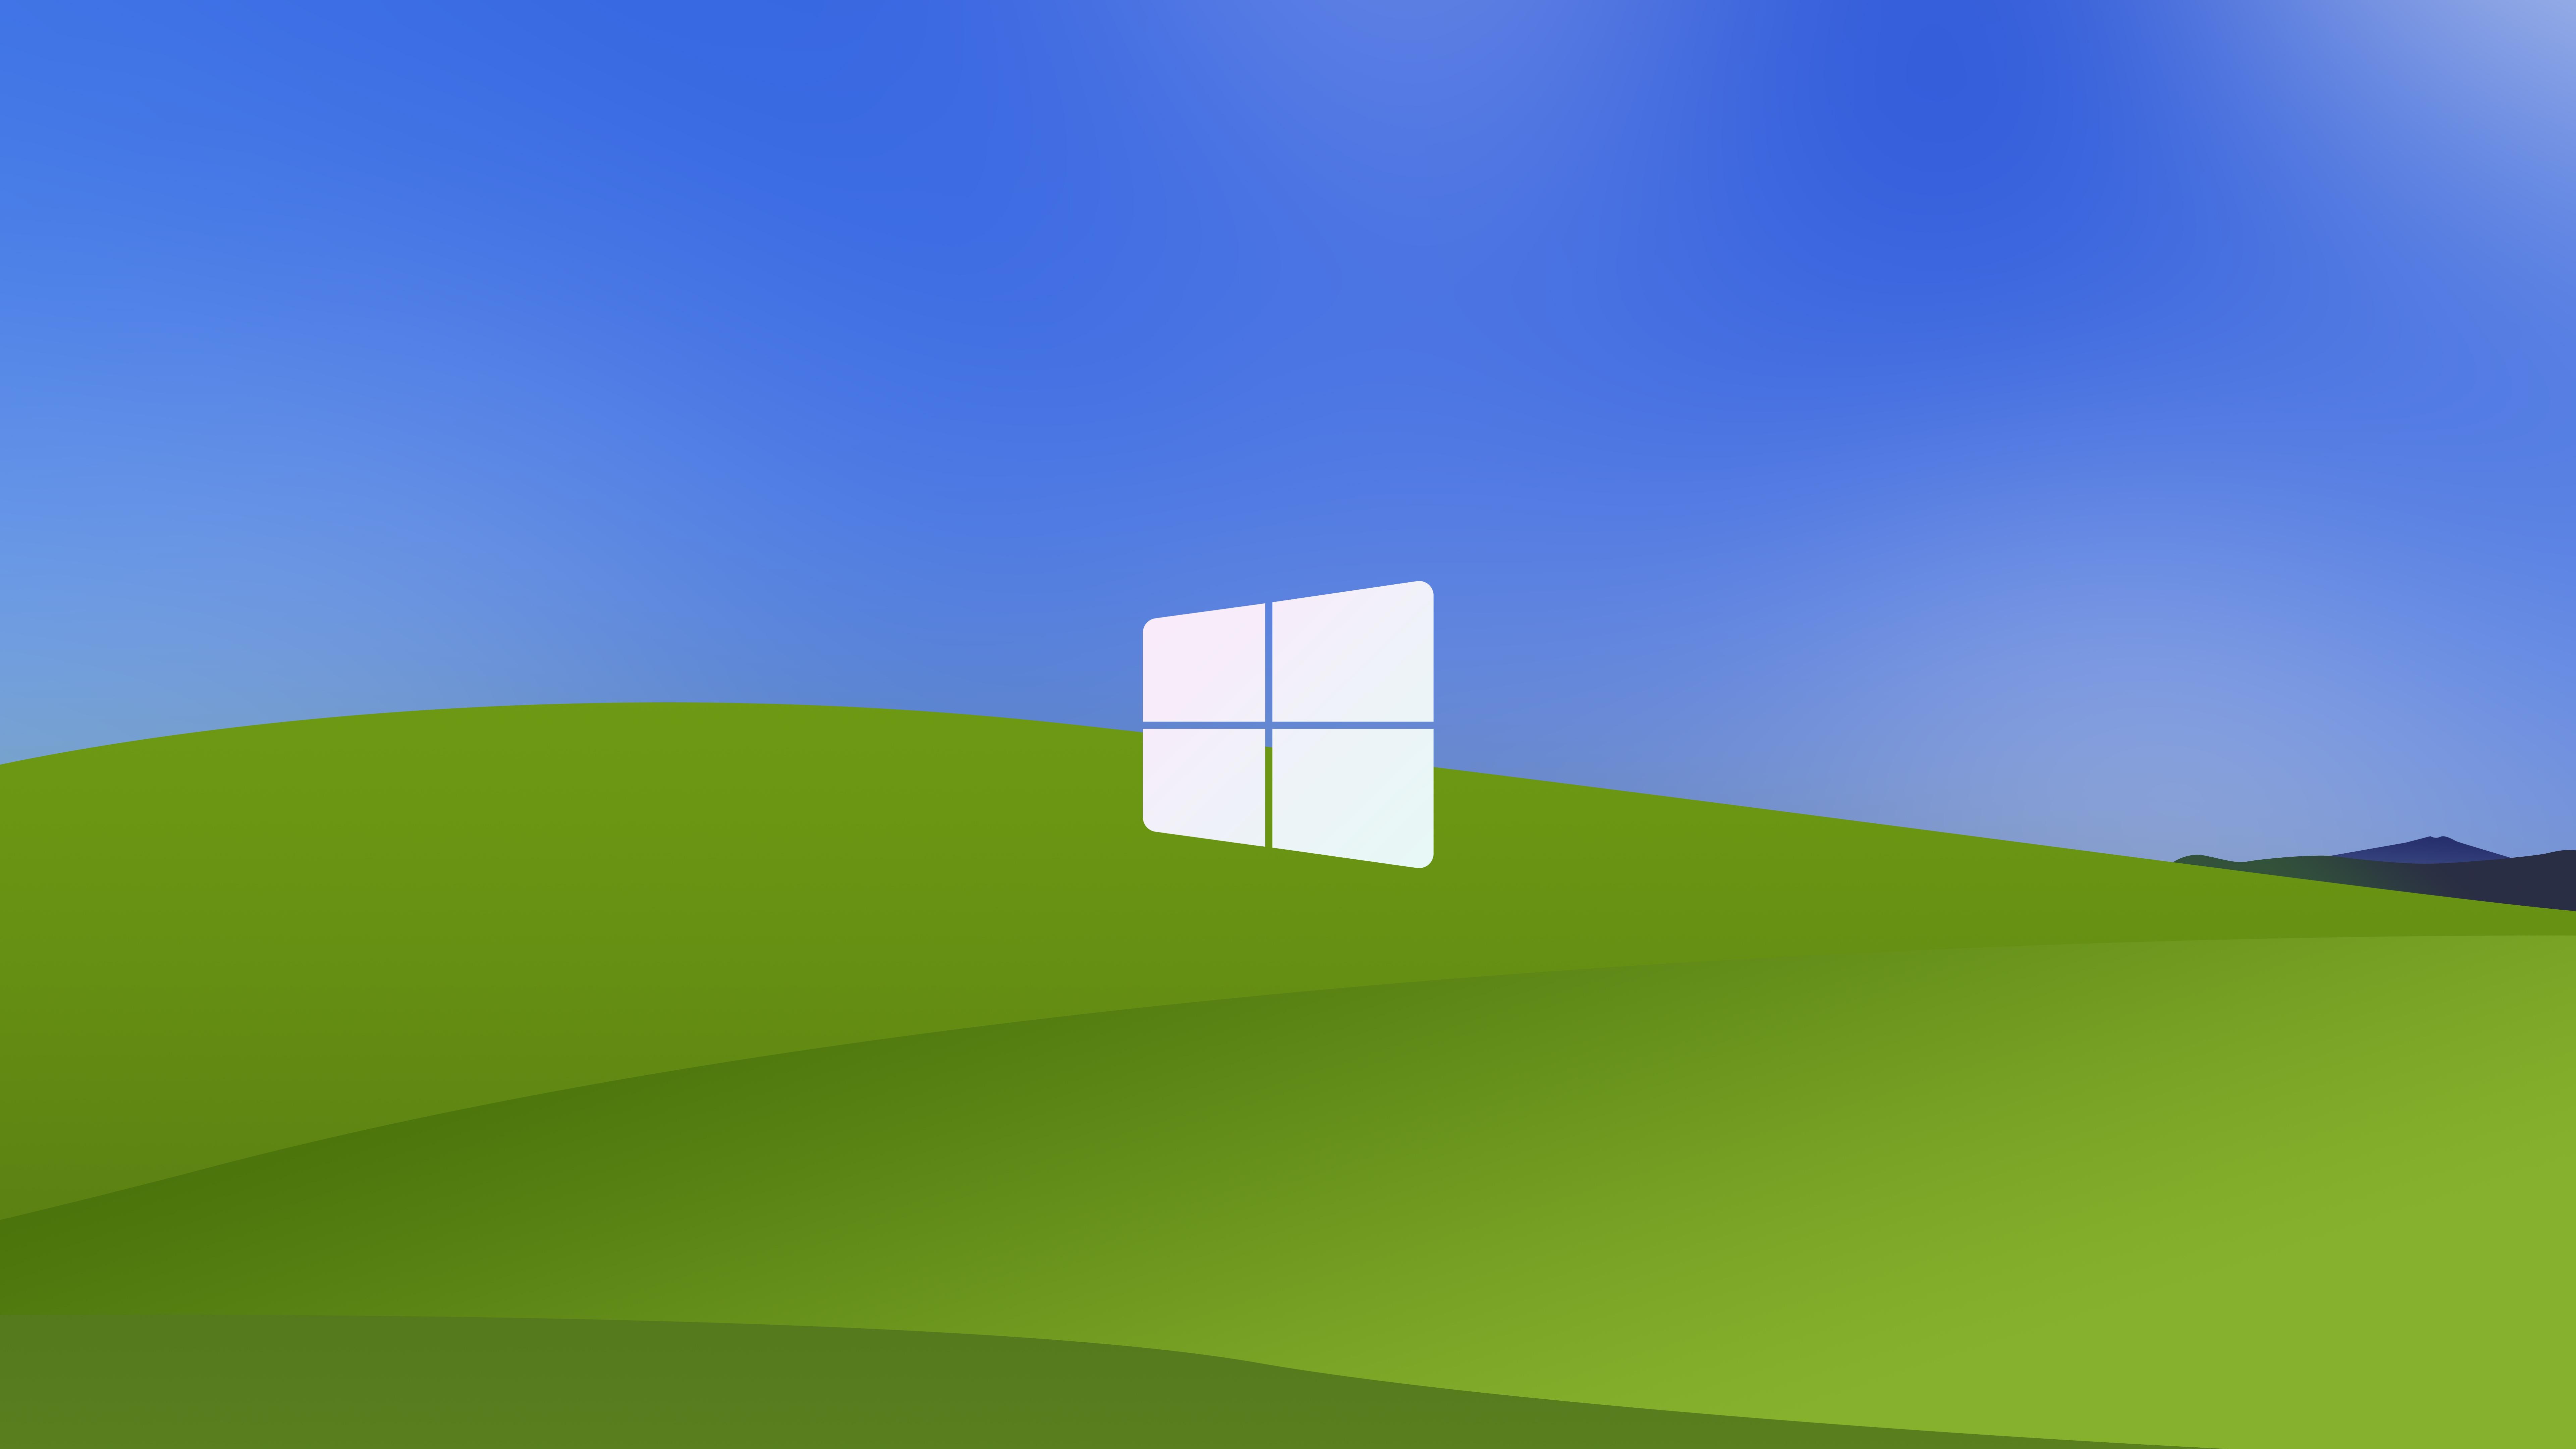 General 7680x4320 Windows XP Microsoft logo operating system minimalism bliss